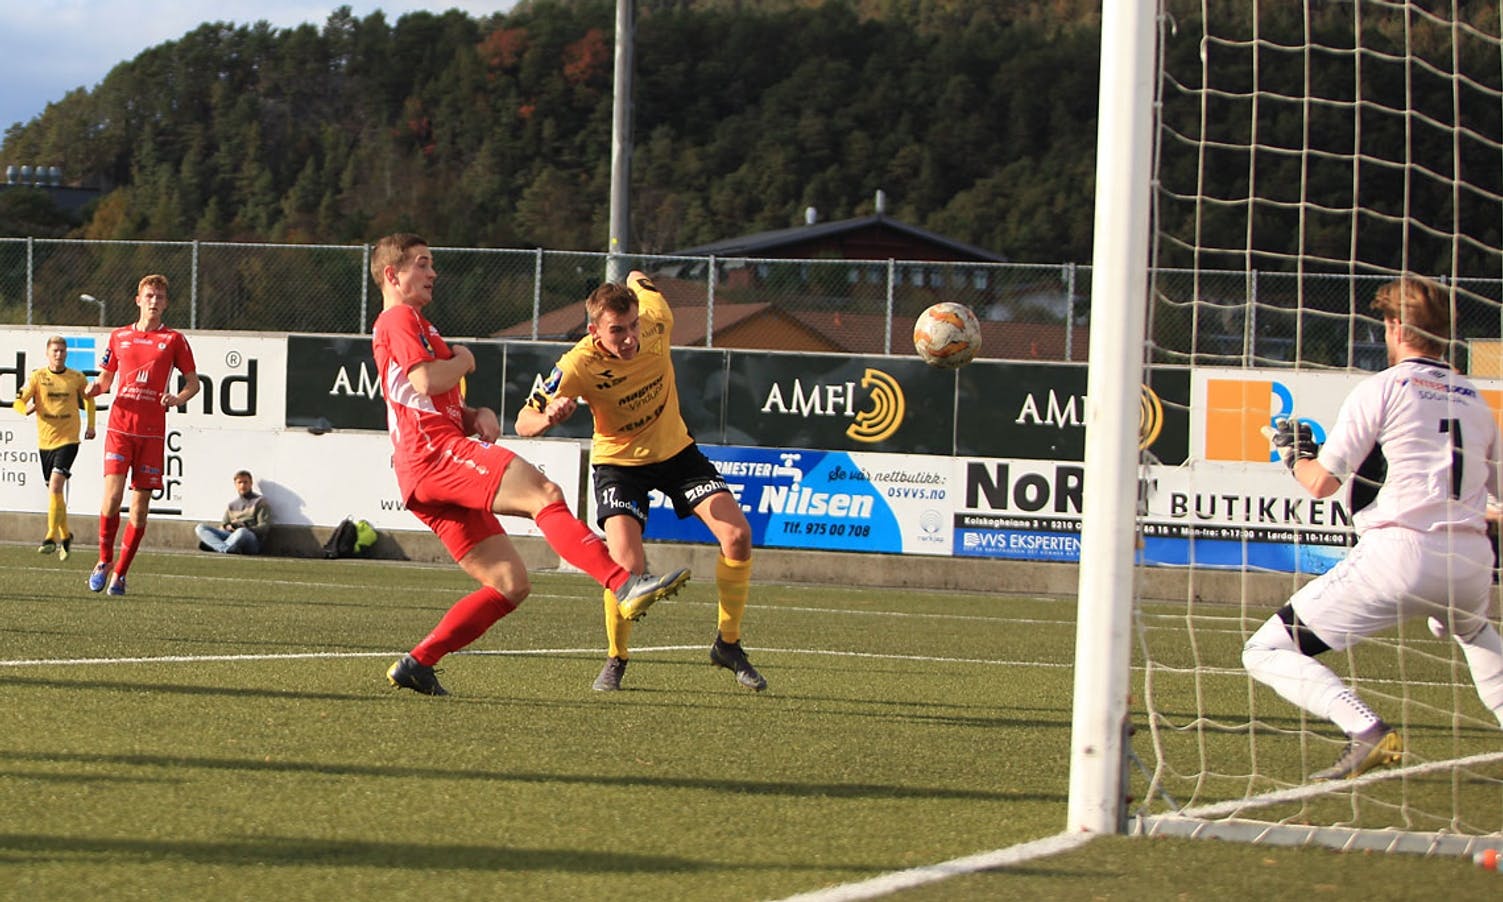 Steffen Kvamsdal heada returen mot mål. (Foto: KVB)